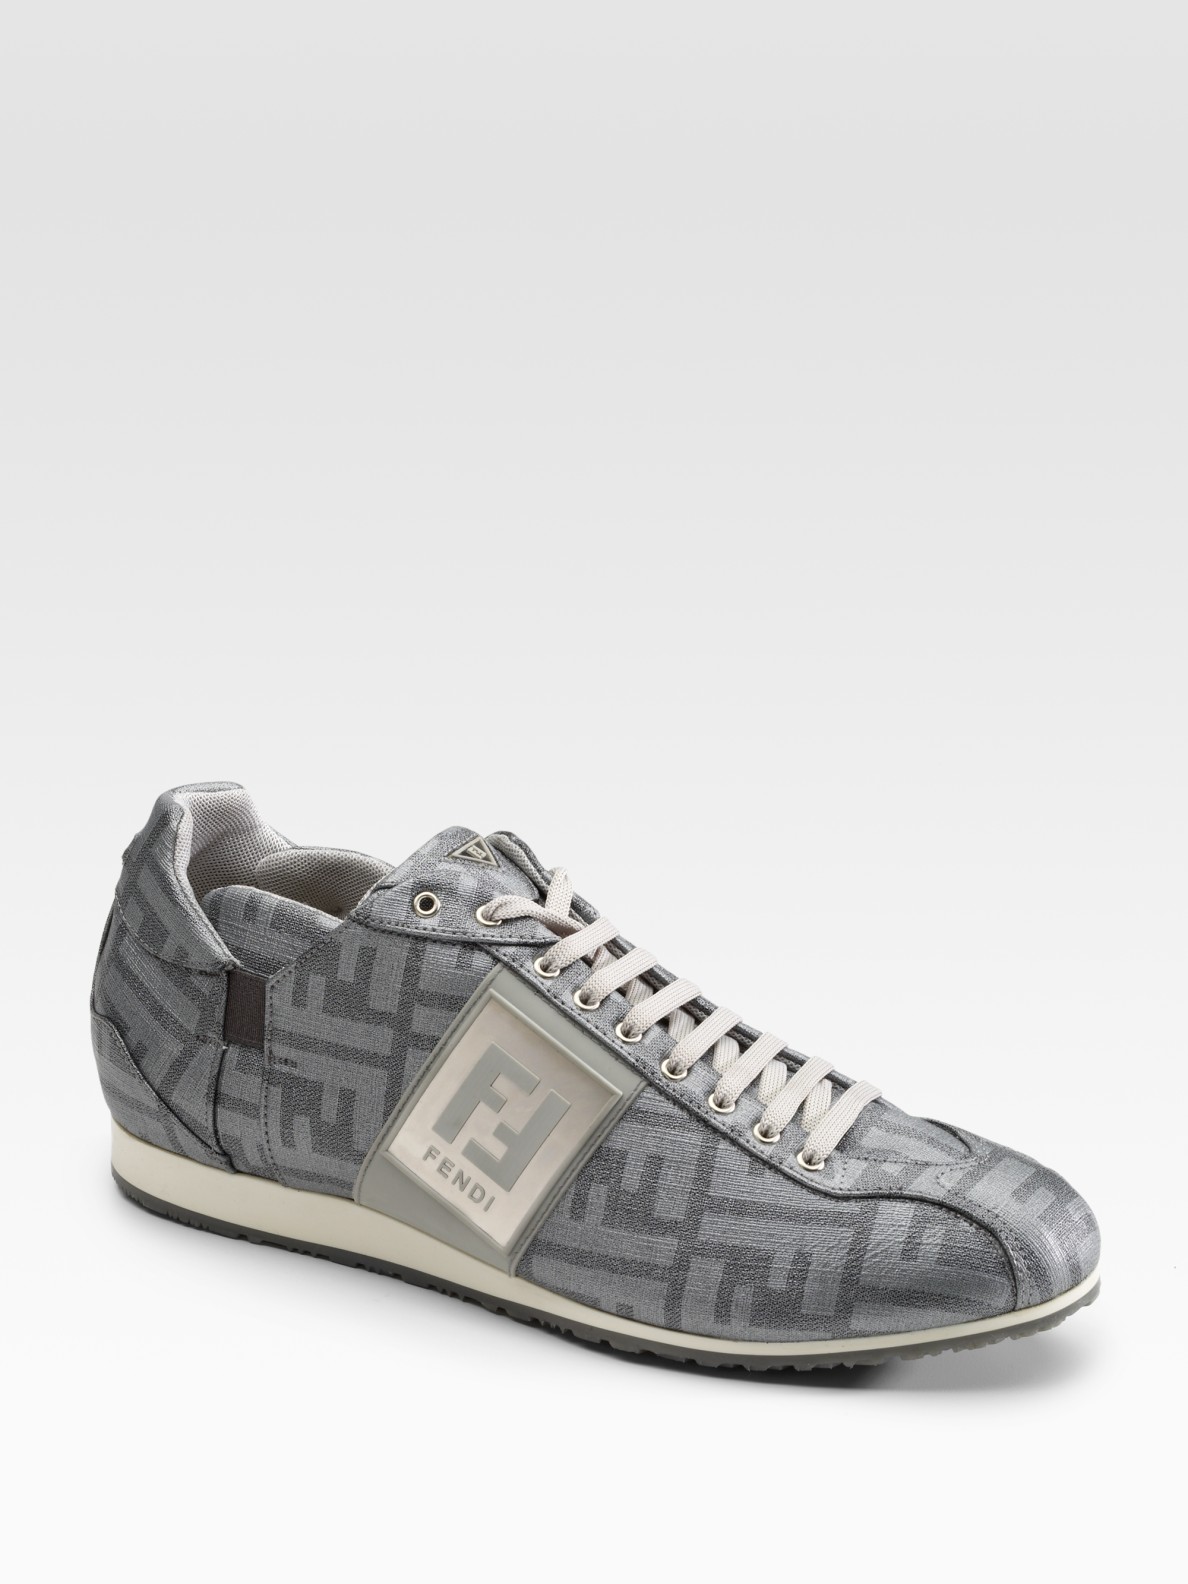 Lyst - Fendi Zucca Canvas Sneakers in Gray for Men